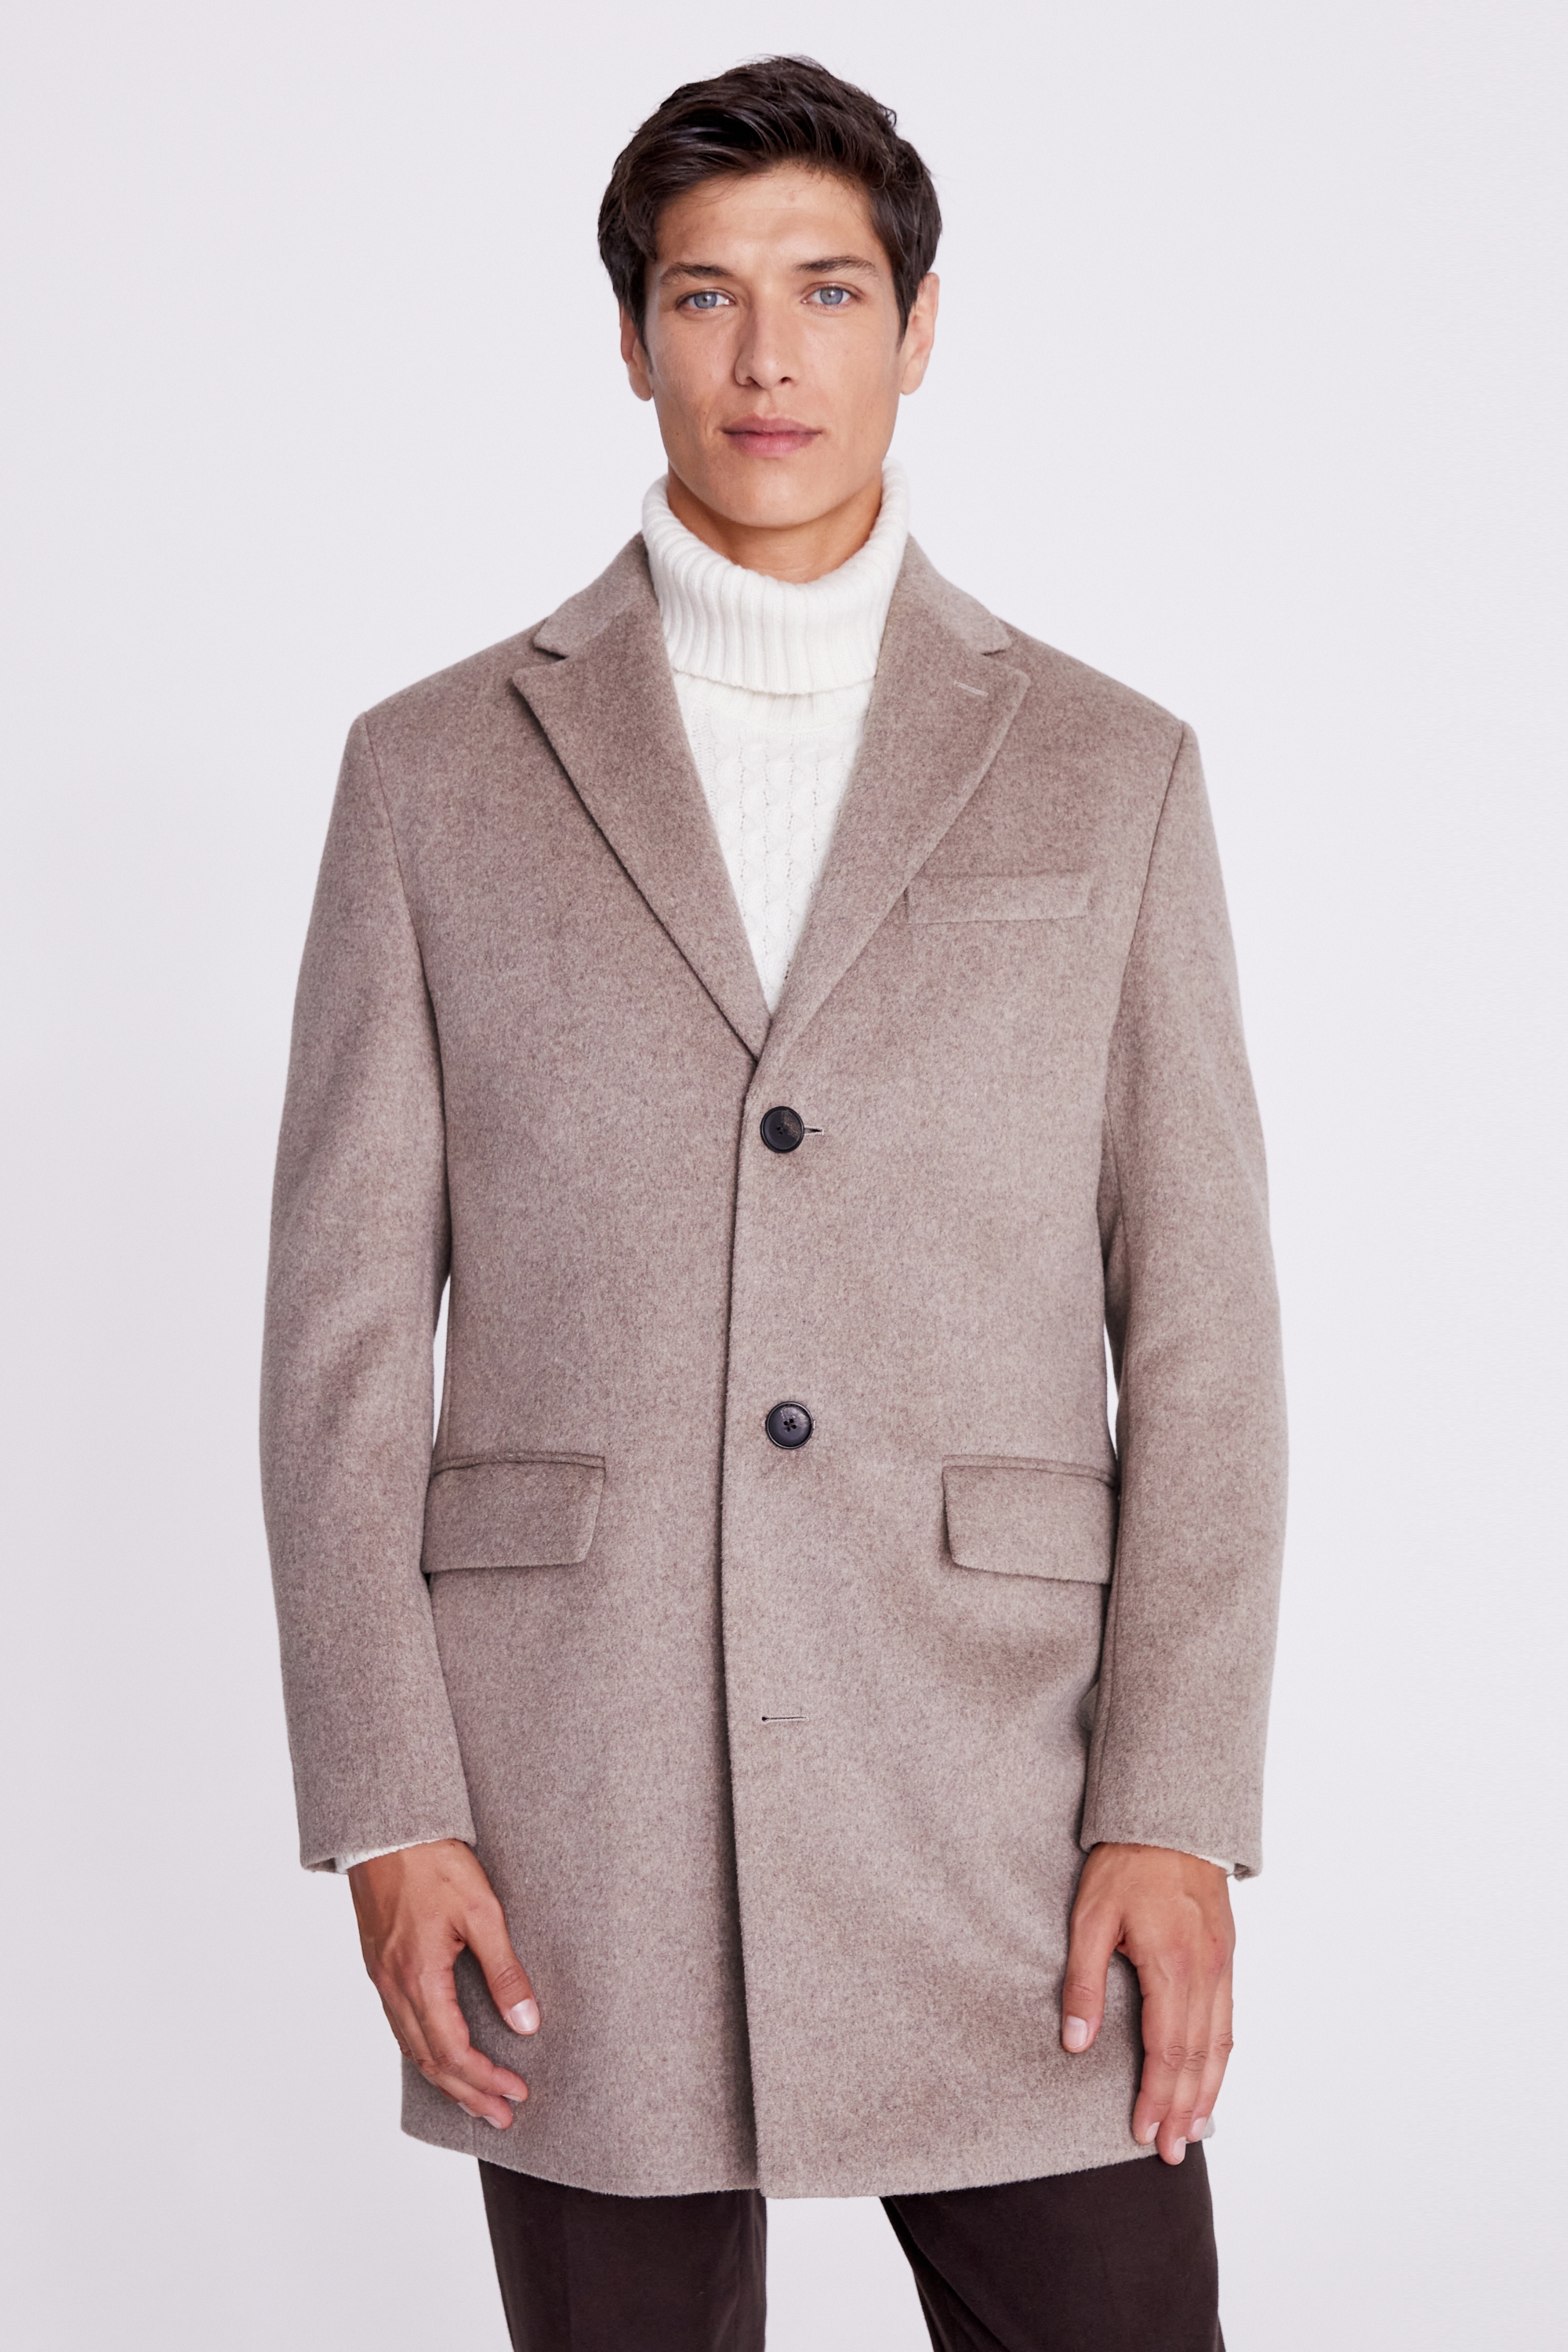 Oatmeal Wool Blend Overcoat | Buy Online at Moss